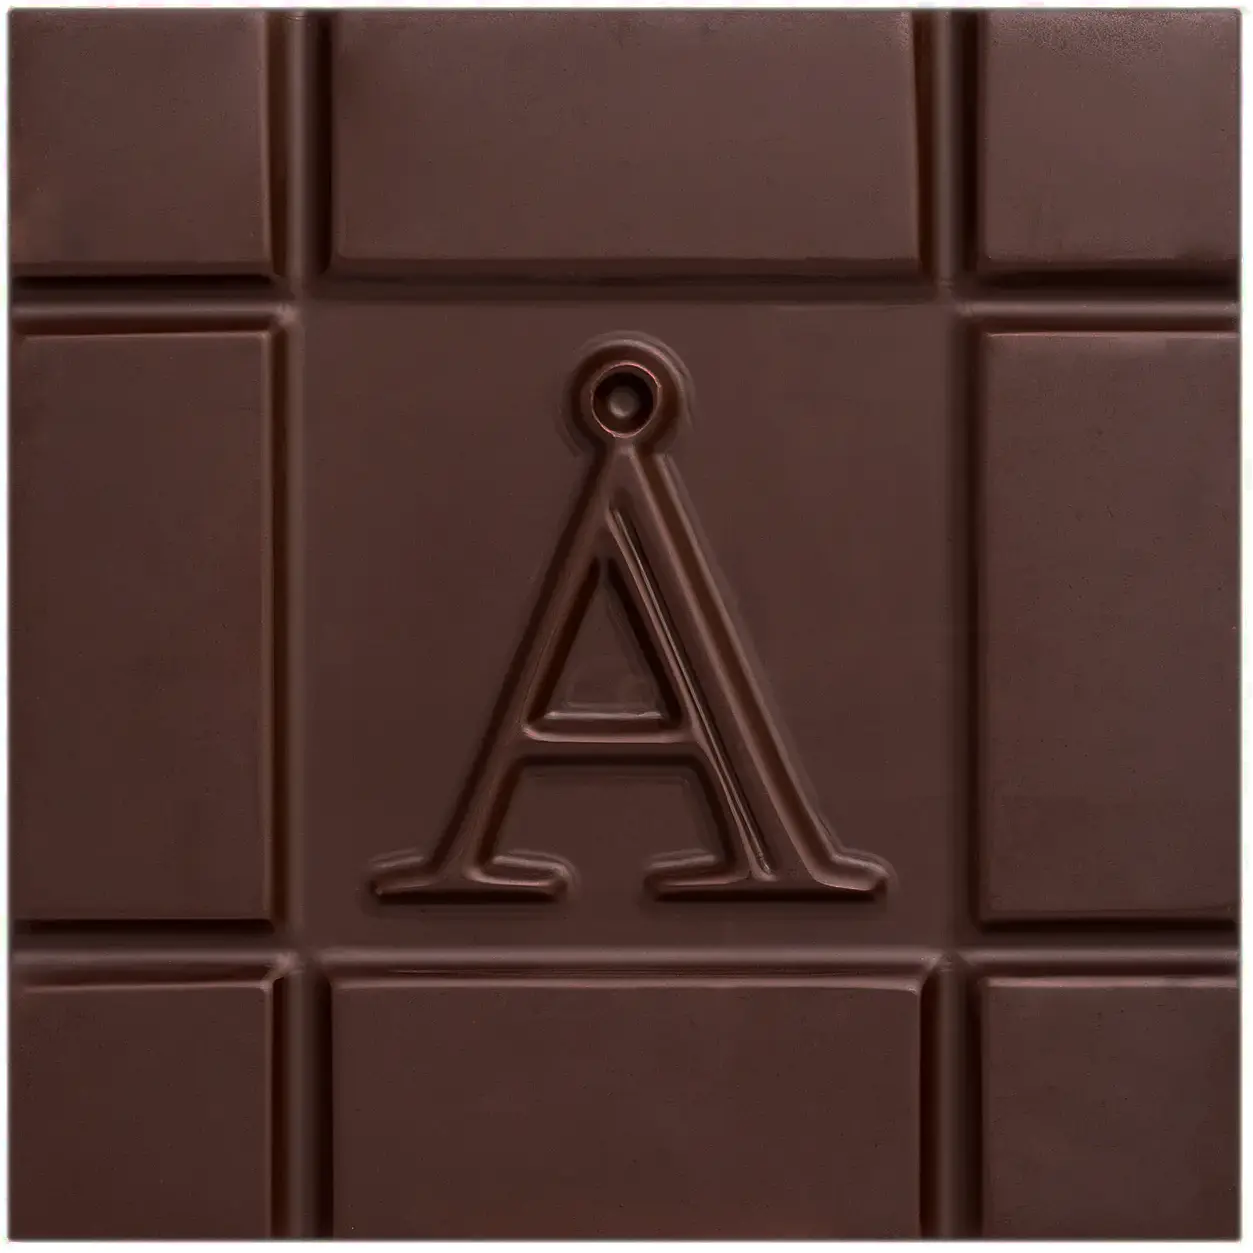 AKESSON'S | Dunkle Schokolade »Madagascar Criollo« 75% | 60g